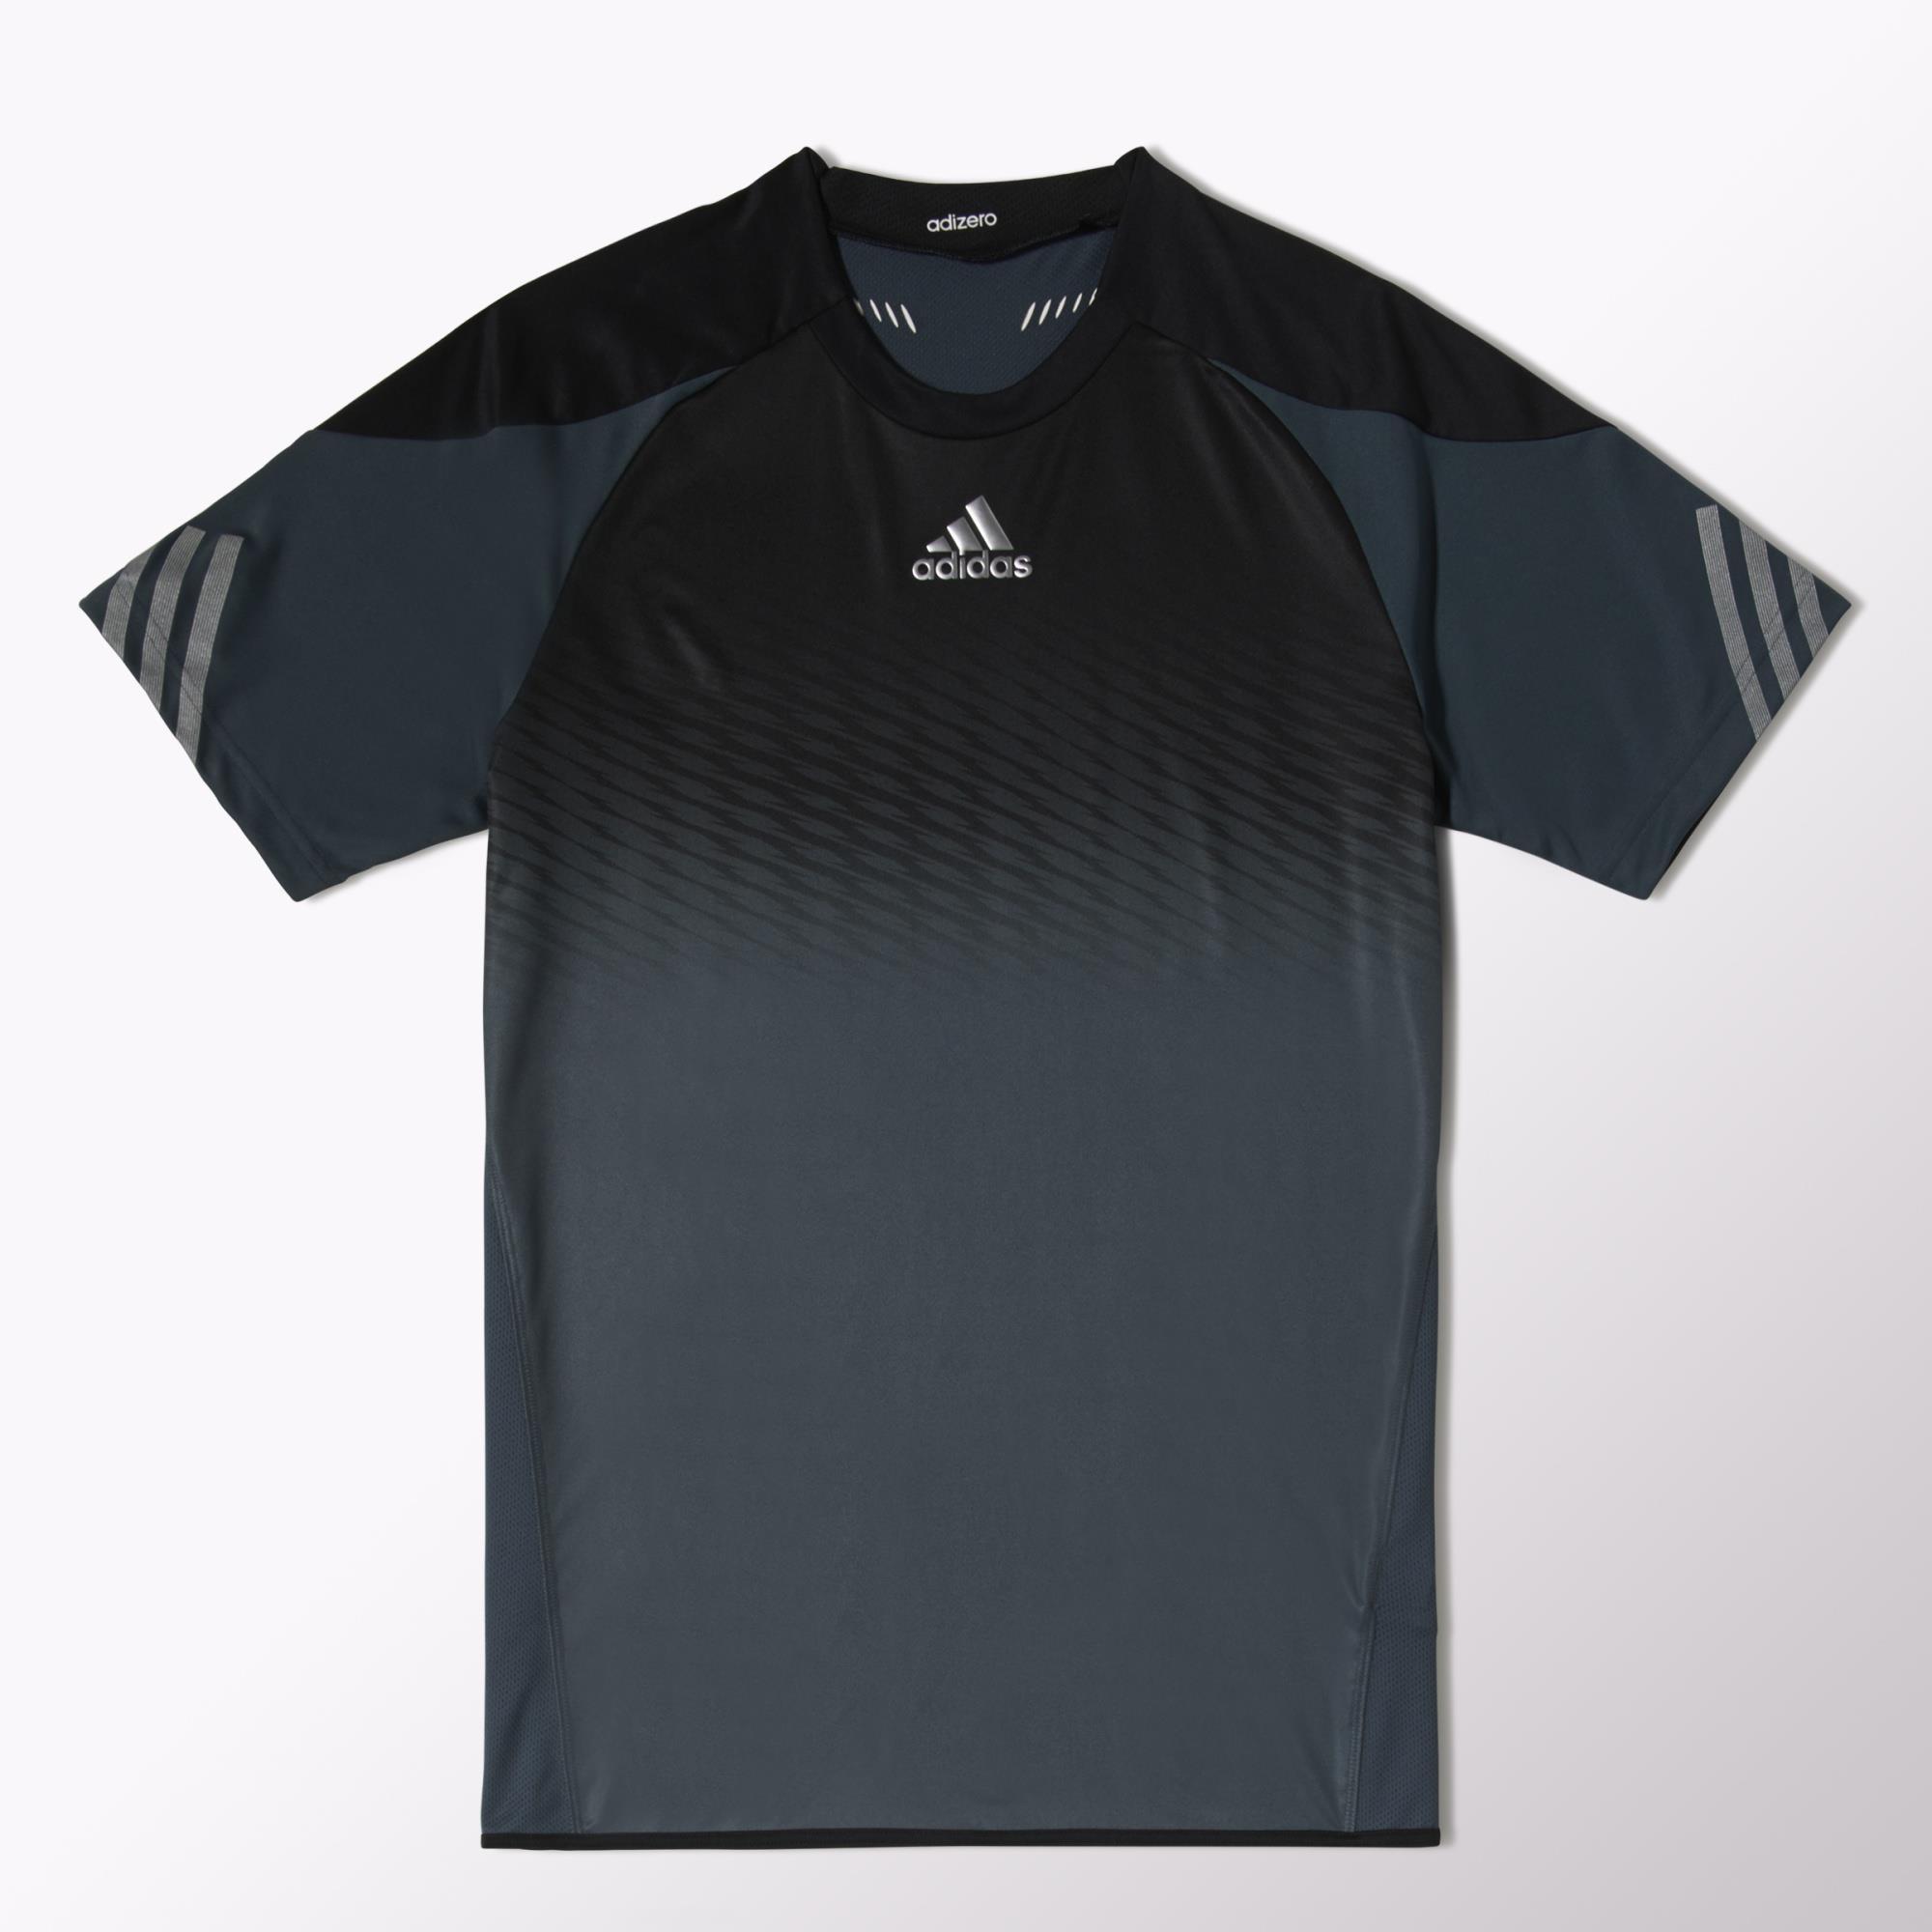 Adidas Mens Adizero Tee - Dark Onix/Black/White - Tennisnuts.com